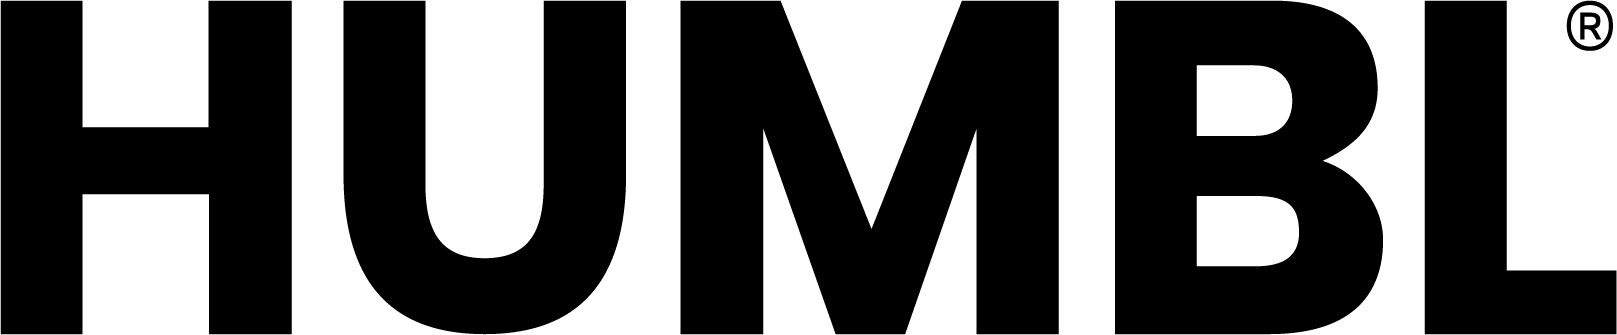 HUMBL logo black.png